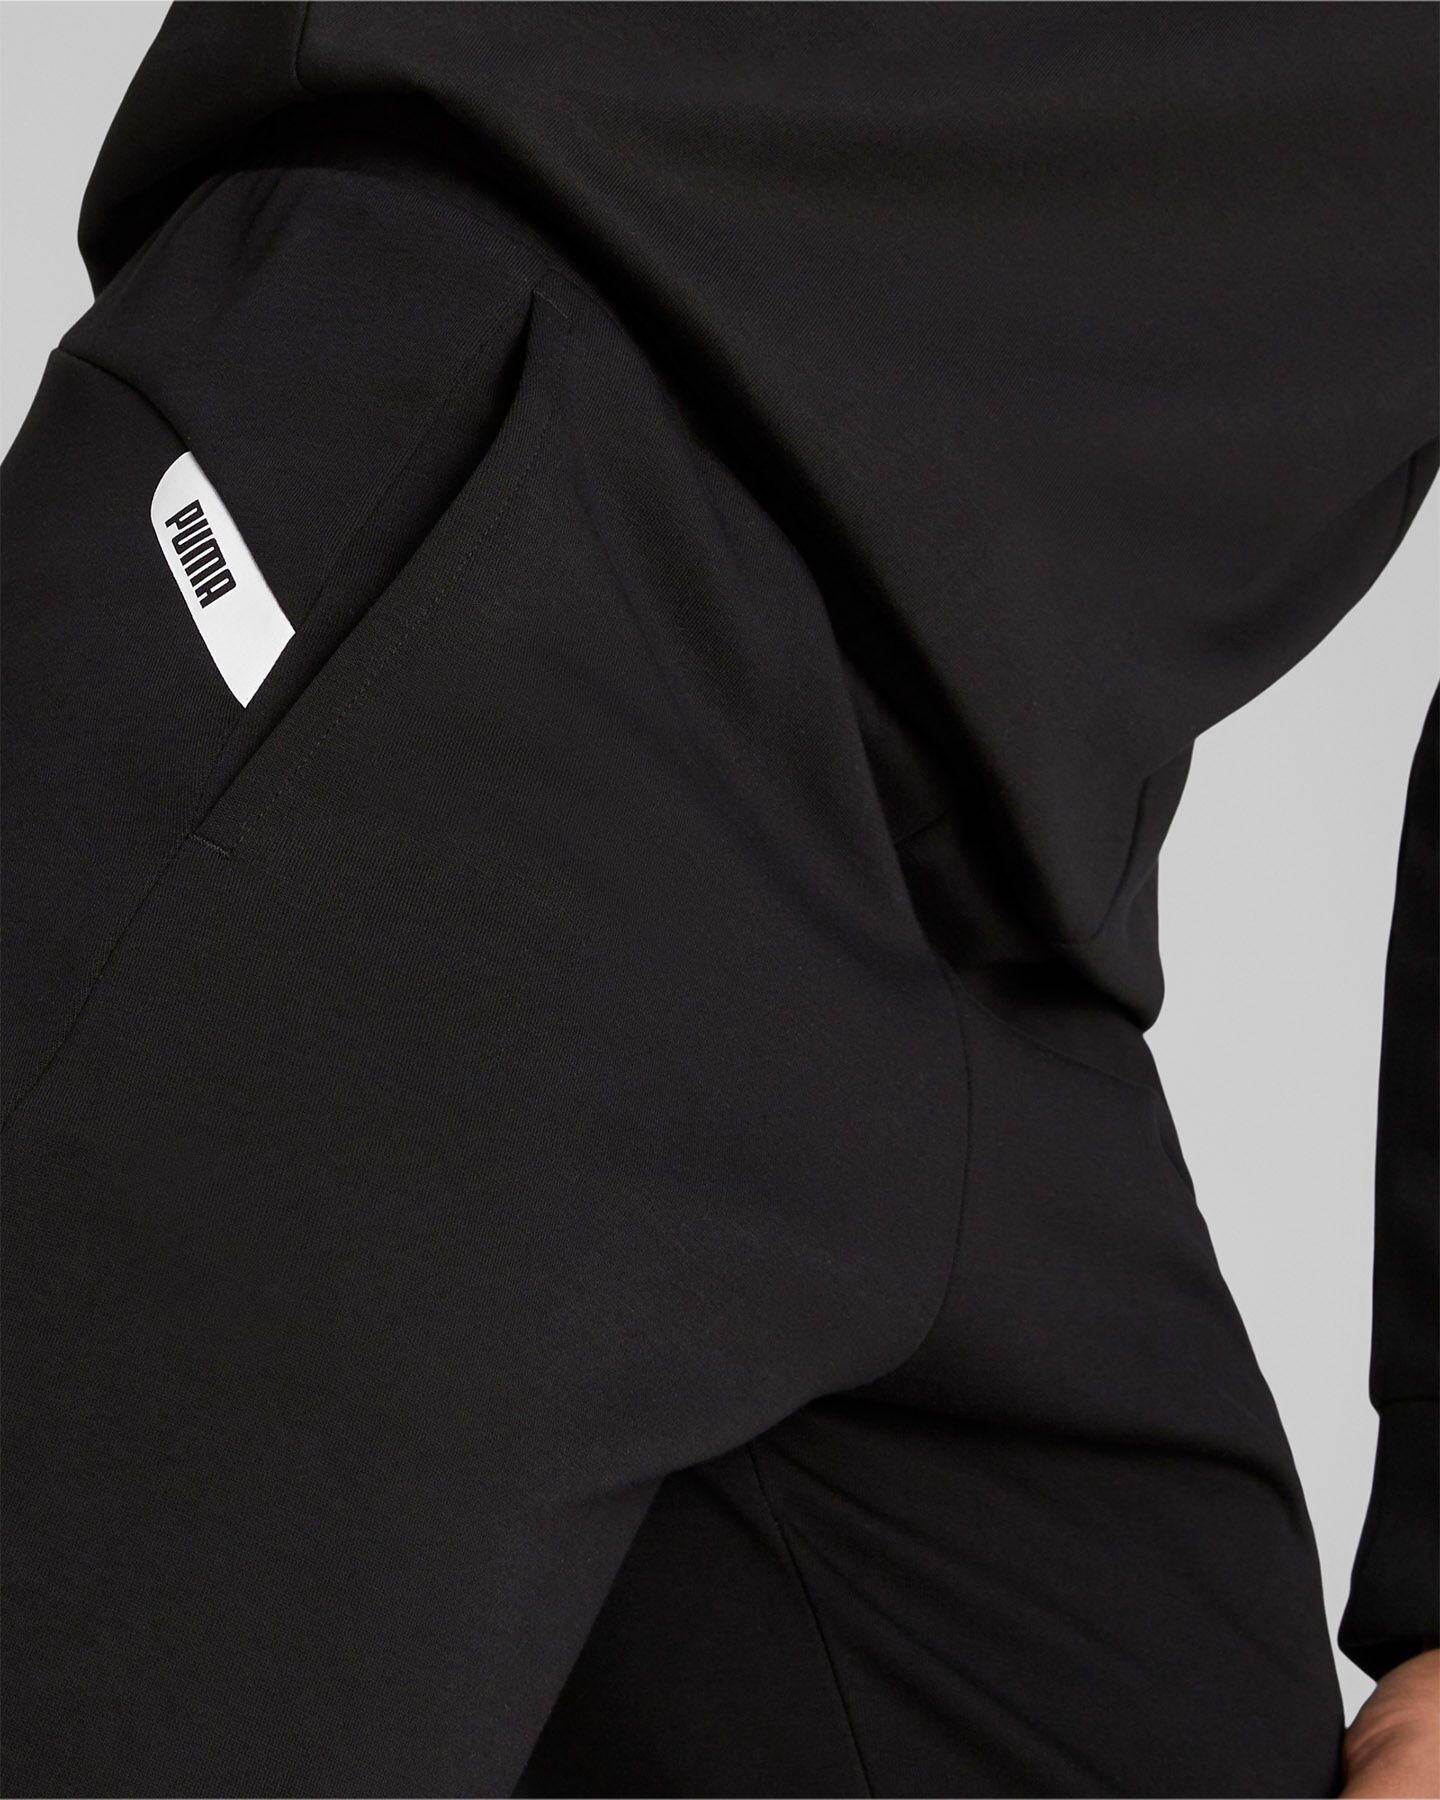  Pantalone PUMA RADICAL DOUBLE M S5541429|01|S scatto 4